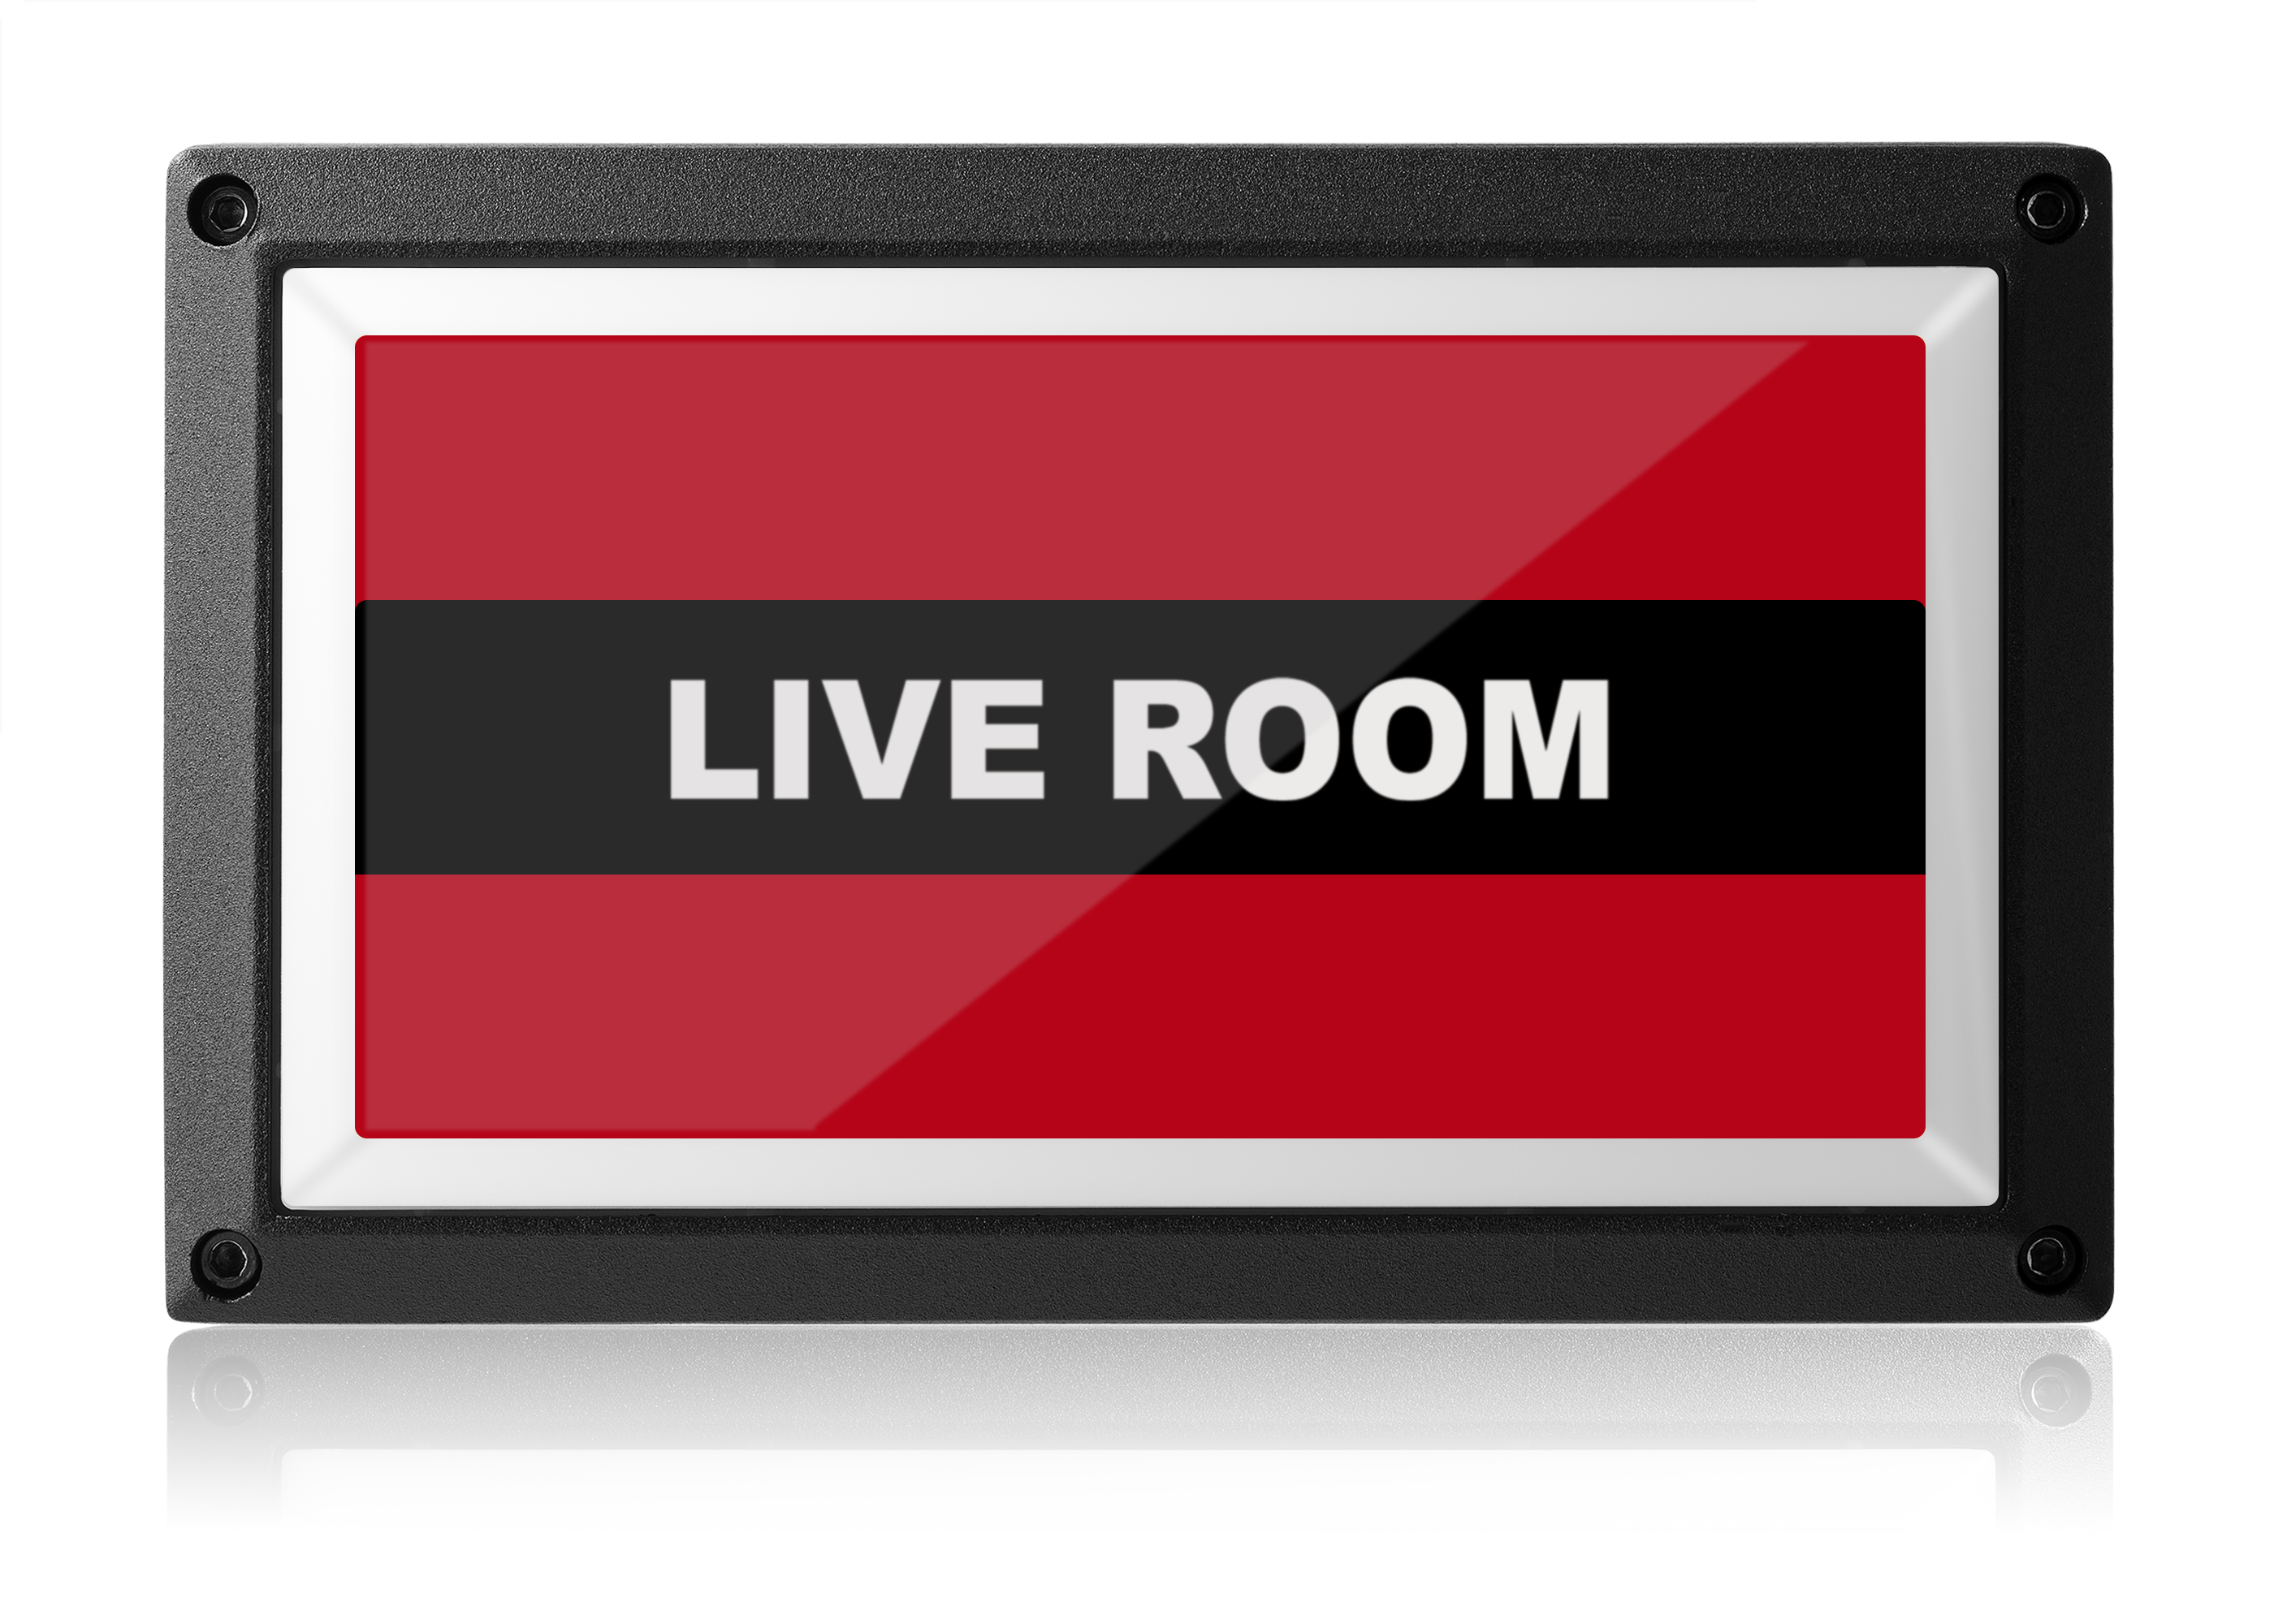 Live Room Light - Red ISO - Rekall Dynamics LED Sign-Red-Low Voltage (12-24v DC)-